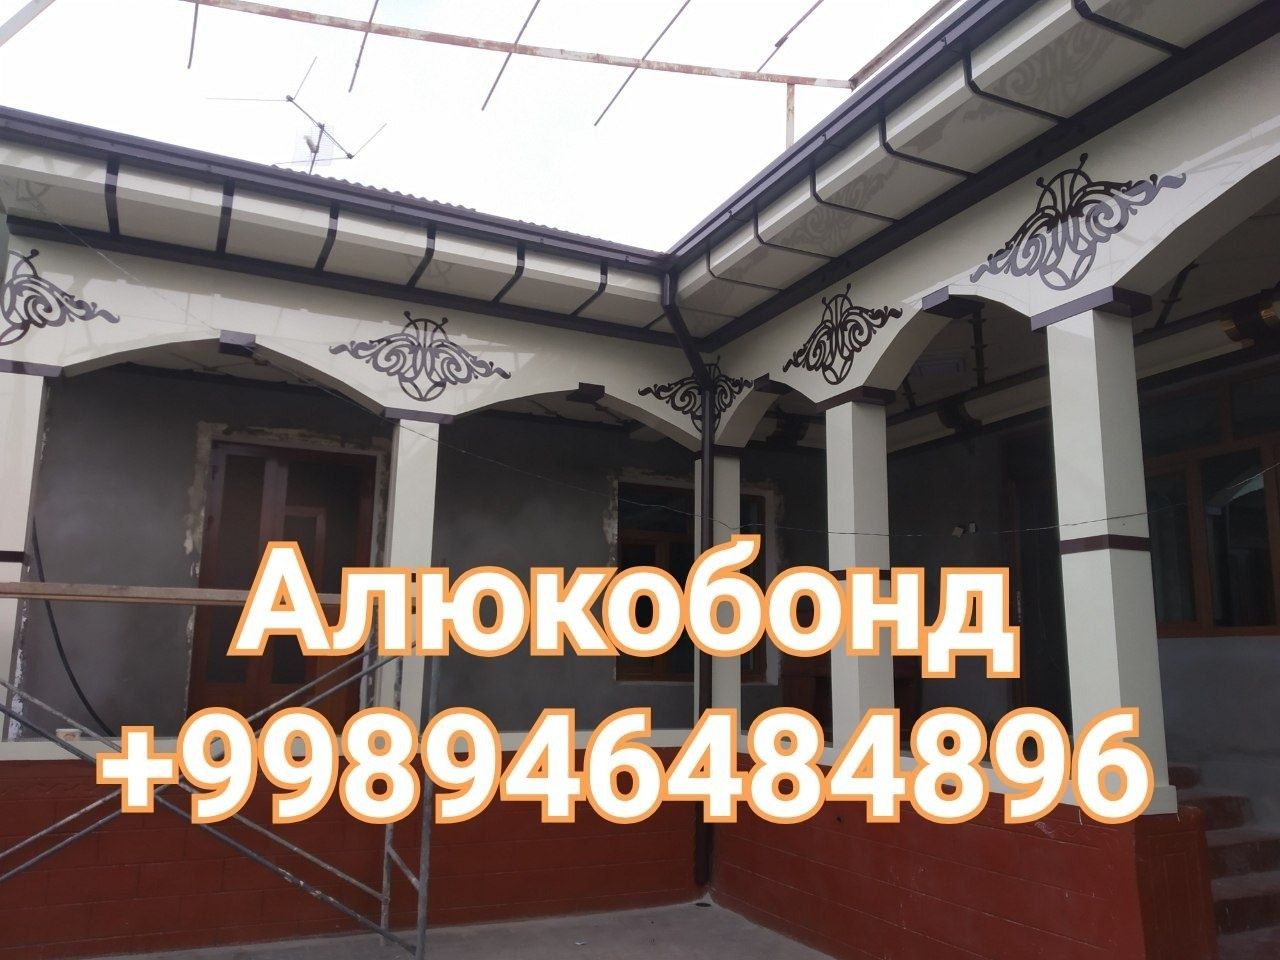 Аликабонд в Ташкенте Алюкабонд алкафон alikafon alicabond